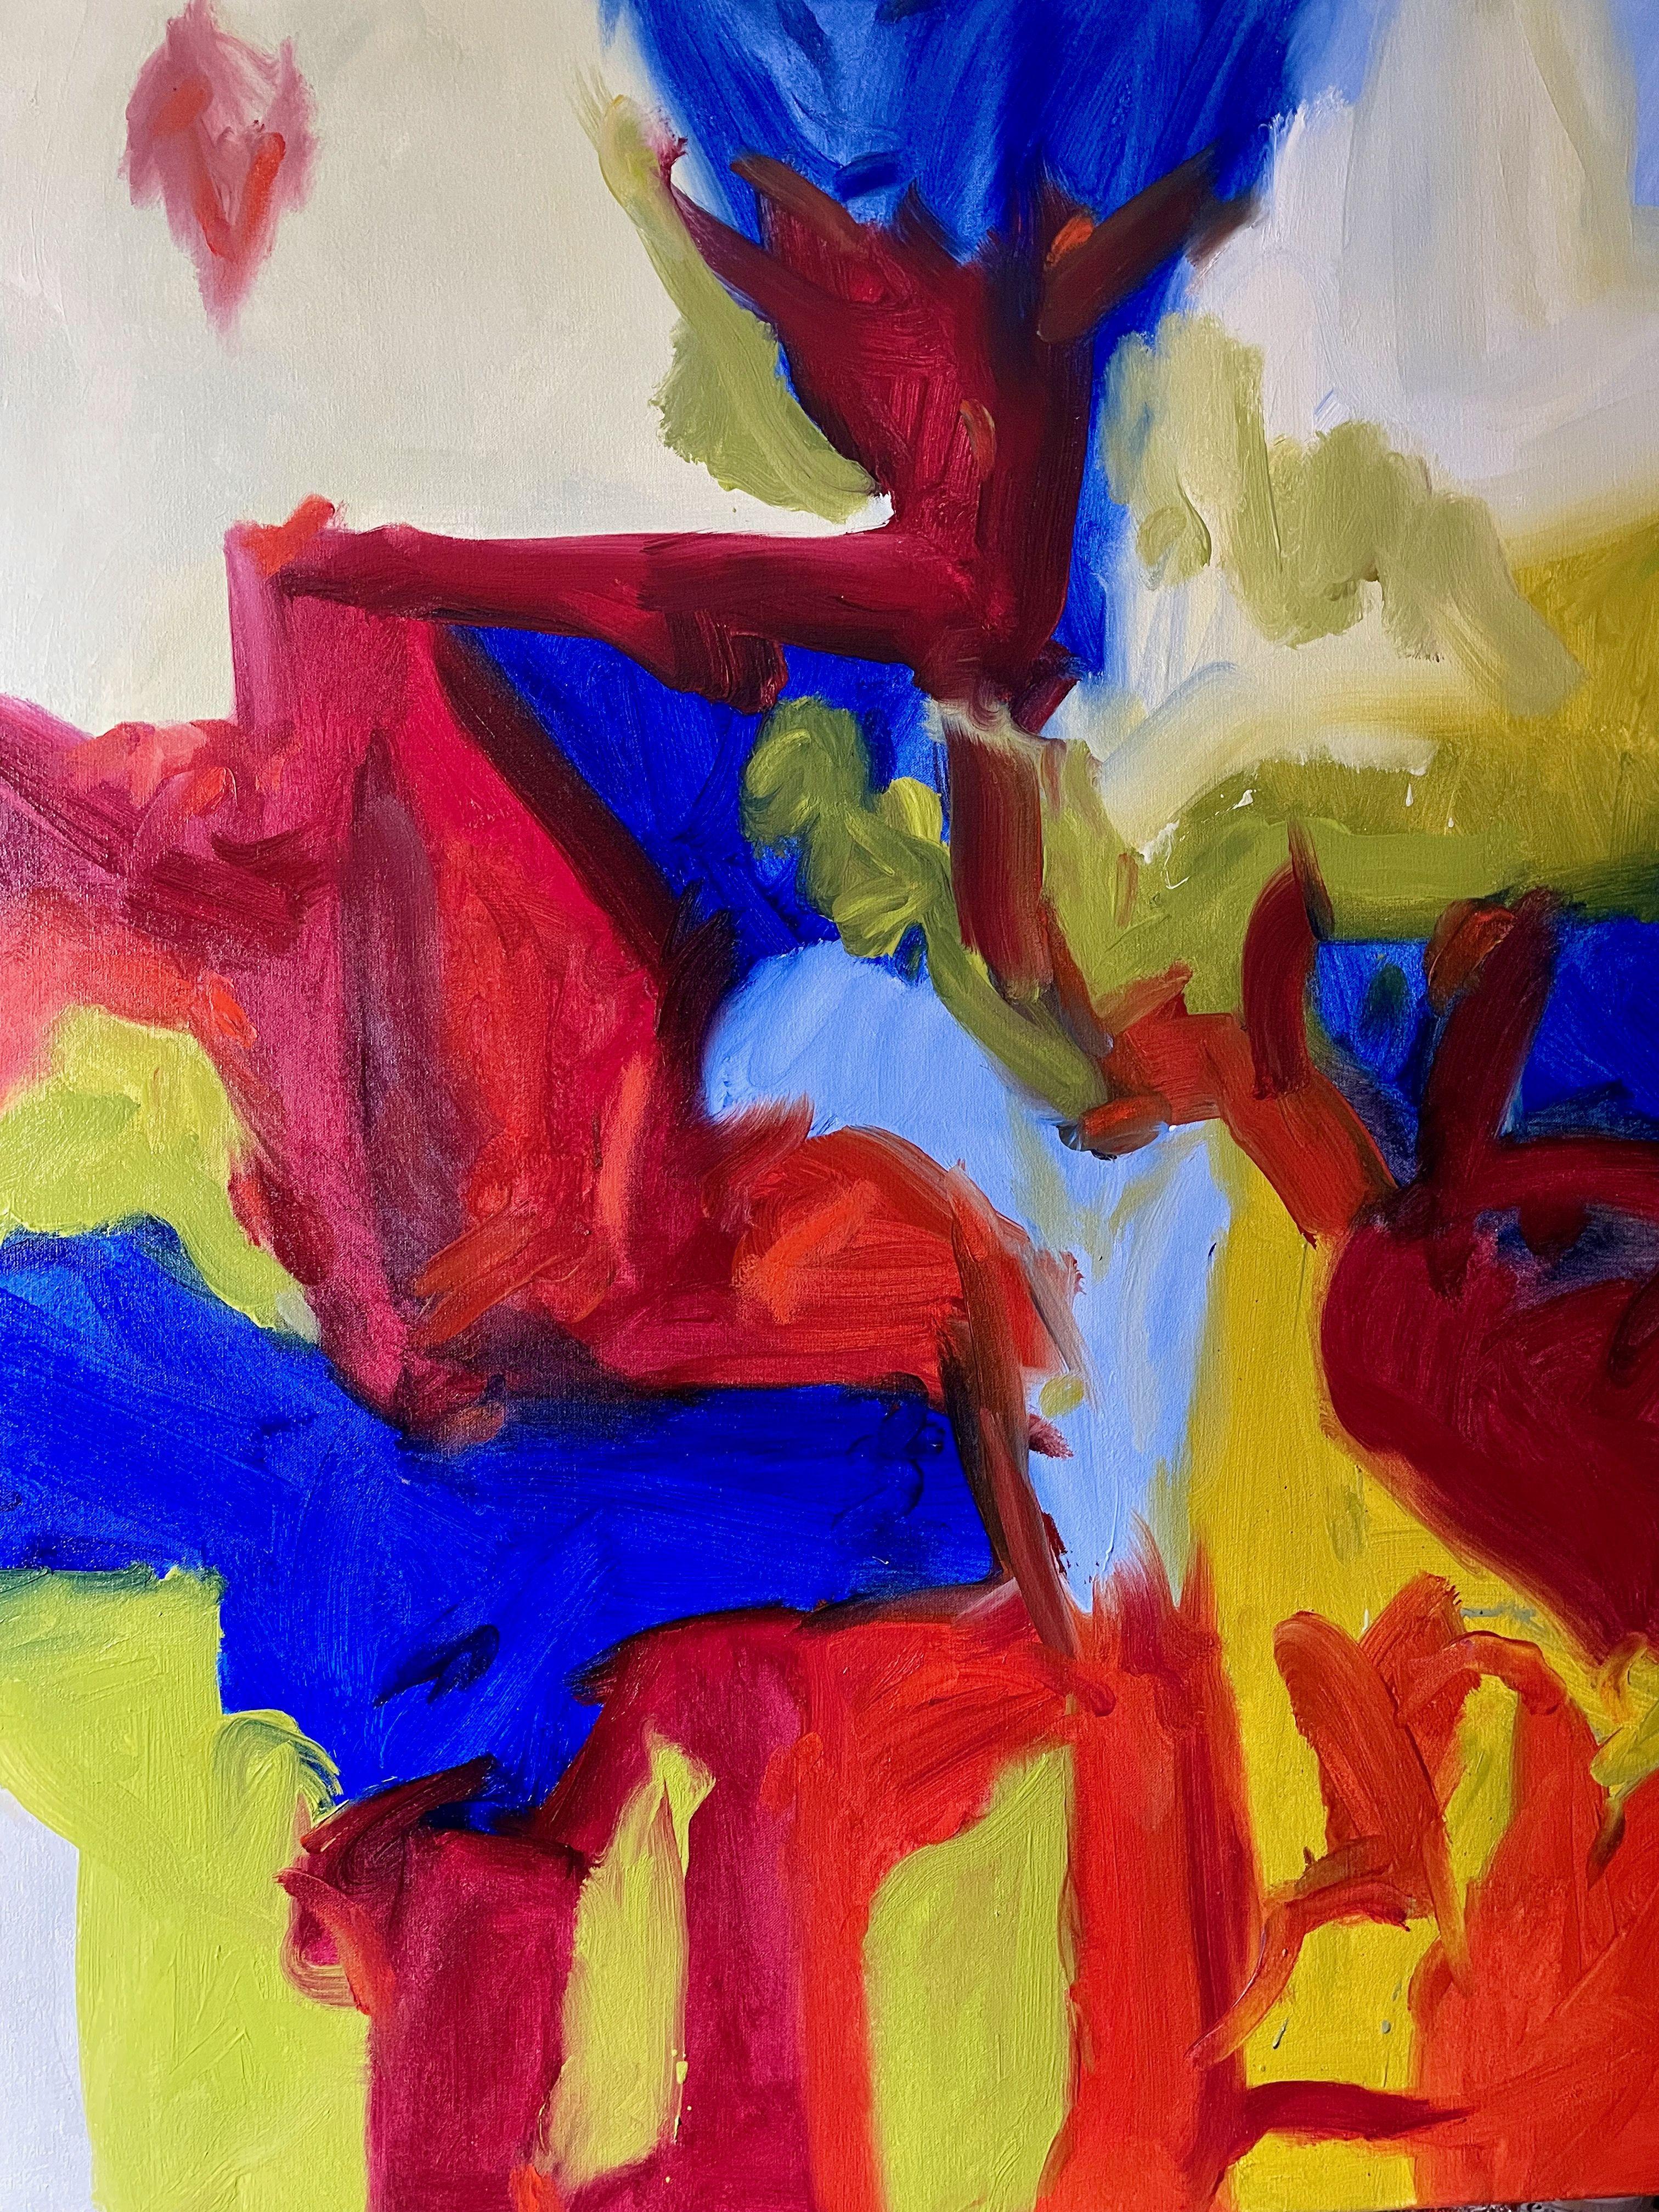 Peinture, huile sur toile, « Amazing Dreams Wake Me Up Every Day » - Painting de Steven Miller